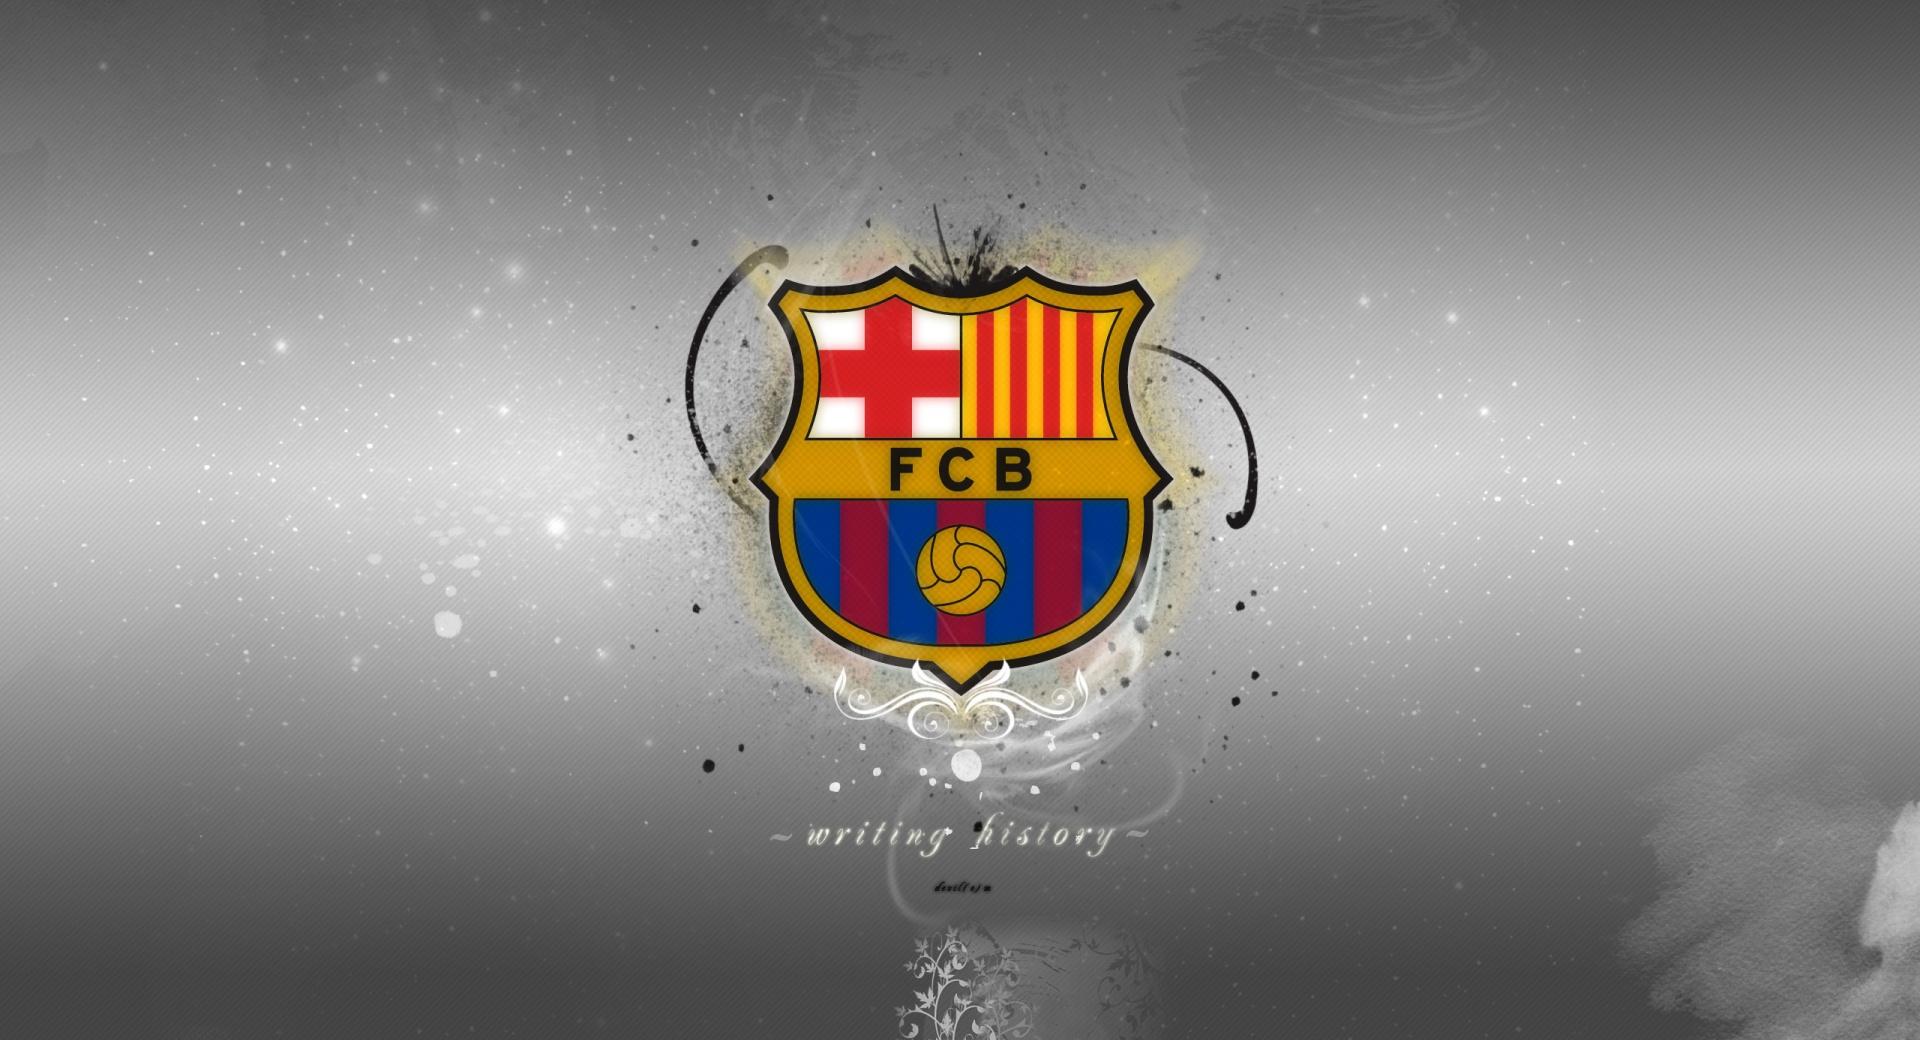 FC Barcelona Emblem at 1280 x 960 size wallpapers HD quality